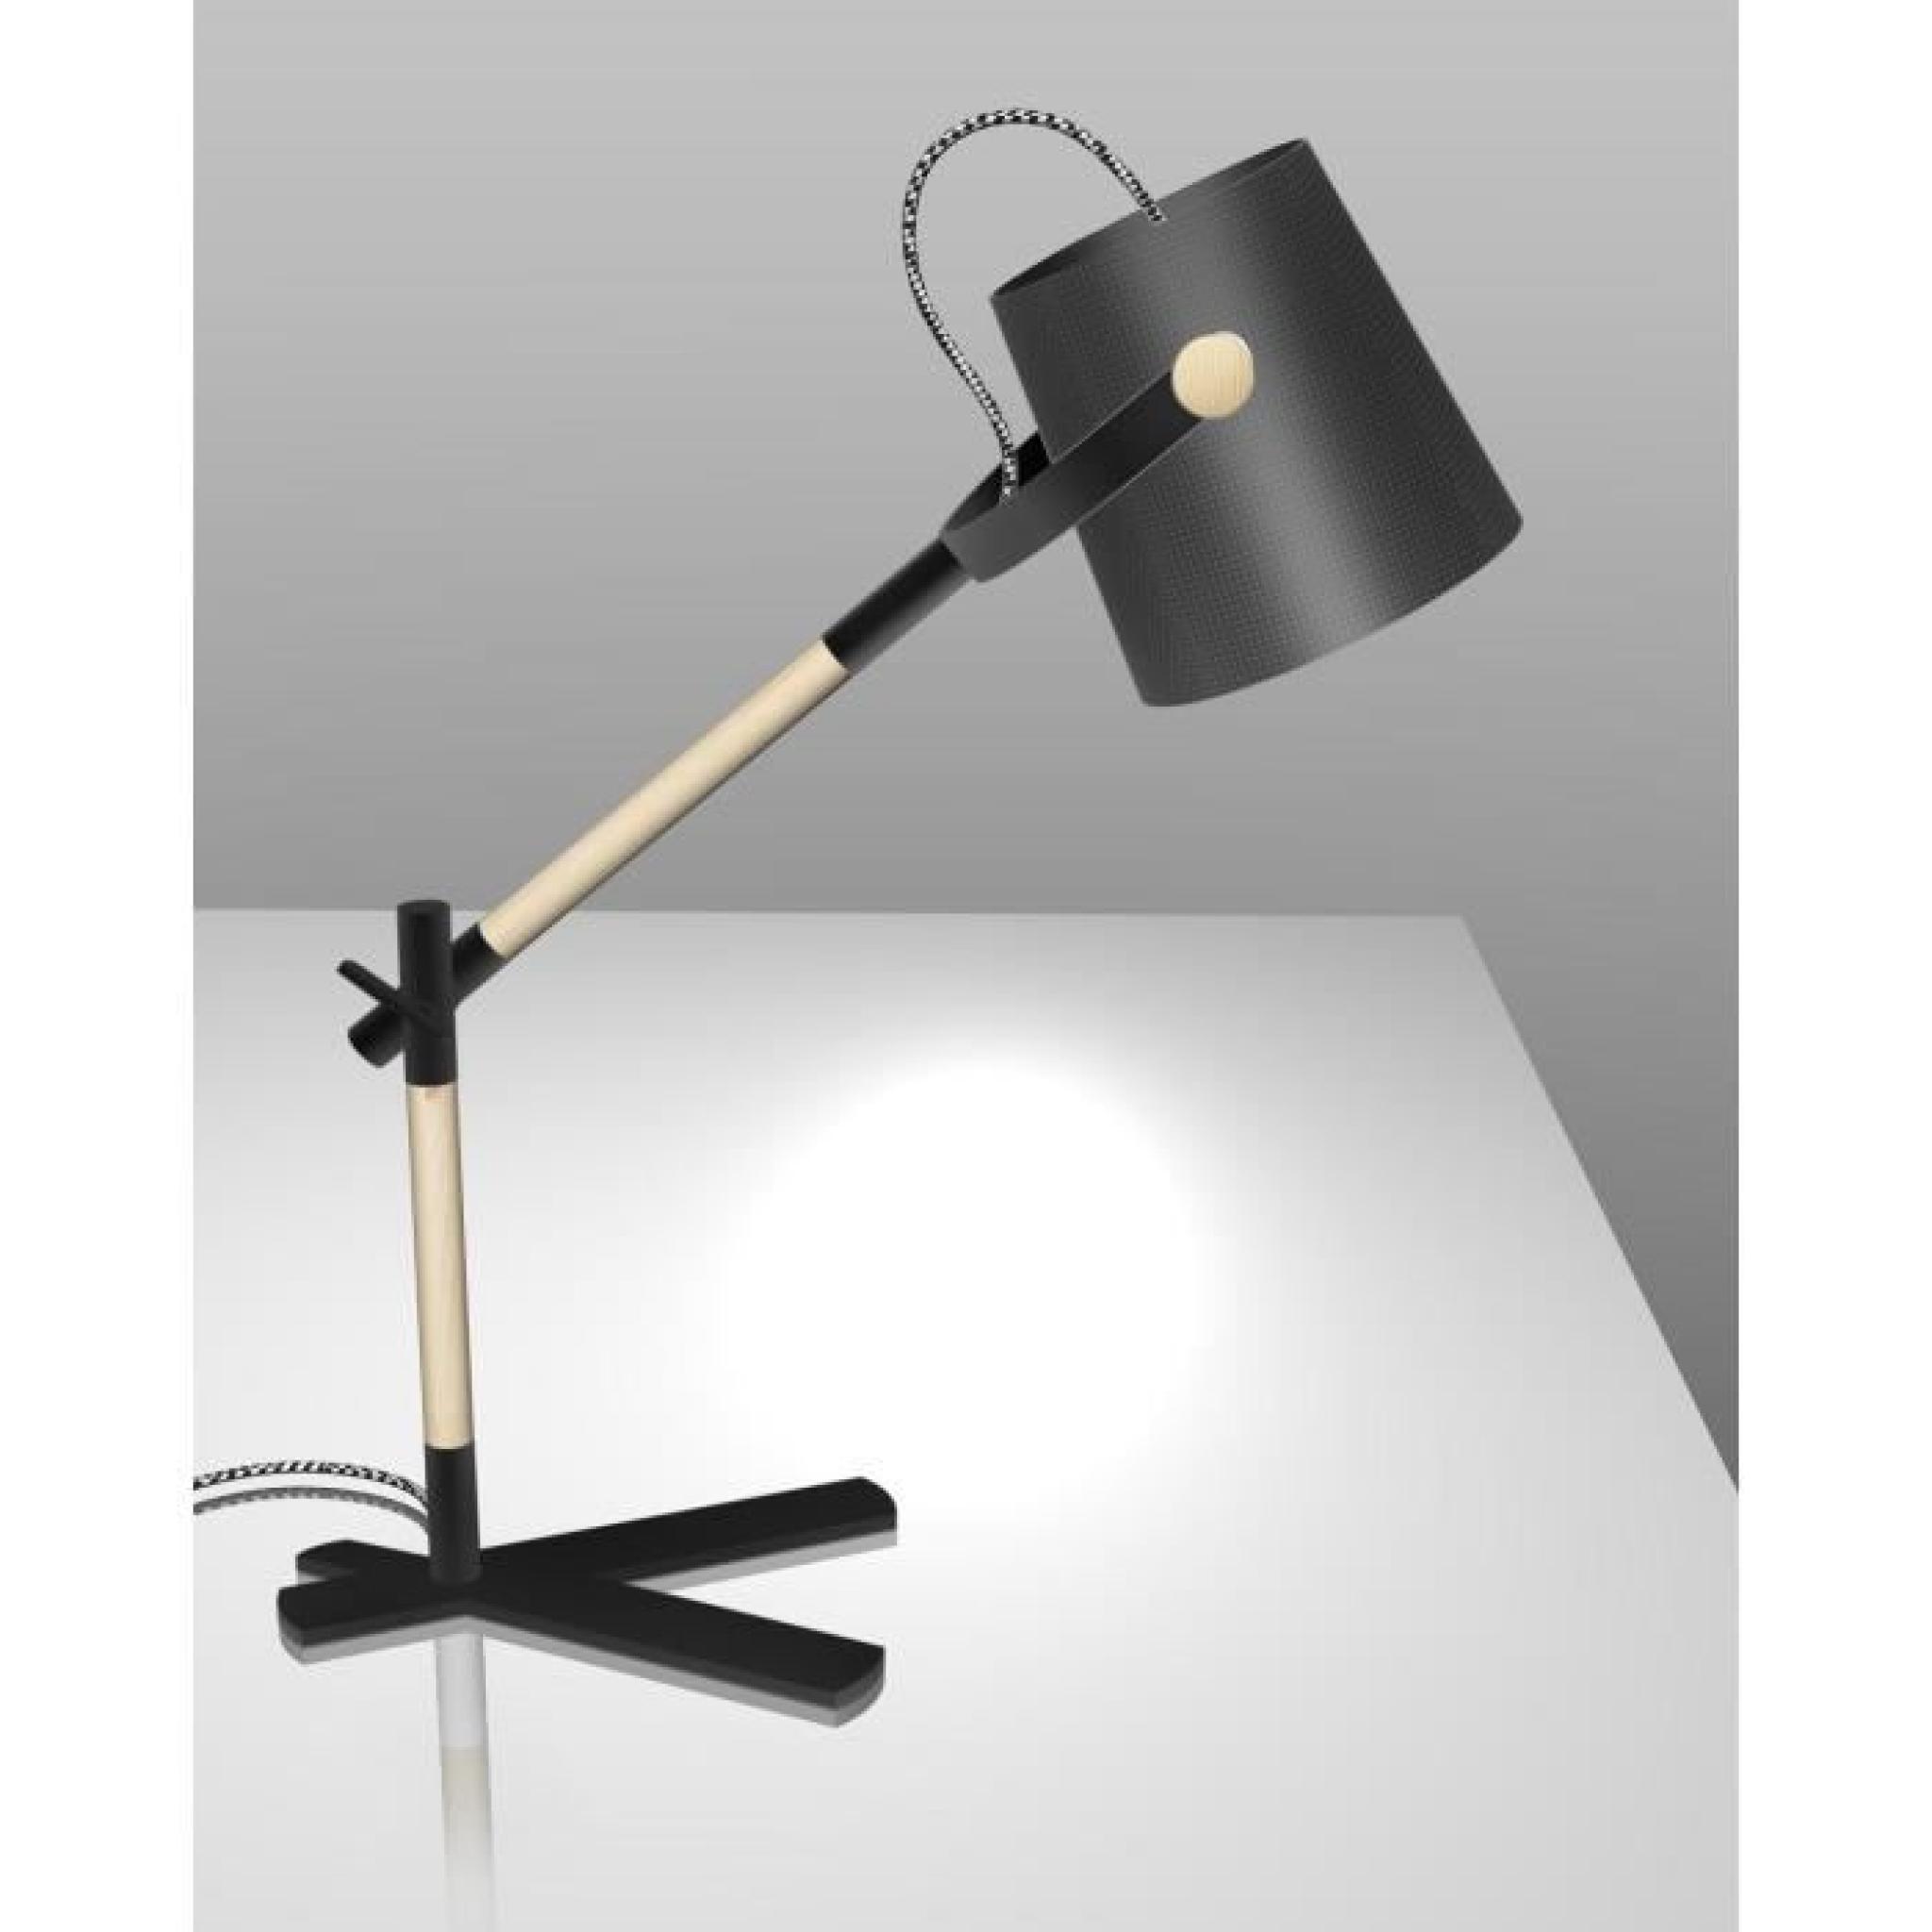 Lampe de table design articuliee - NORDICA